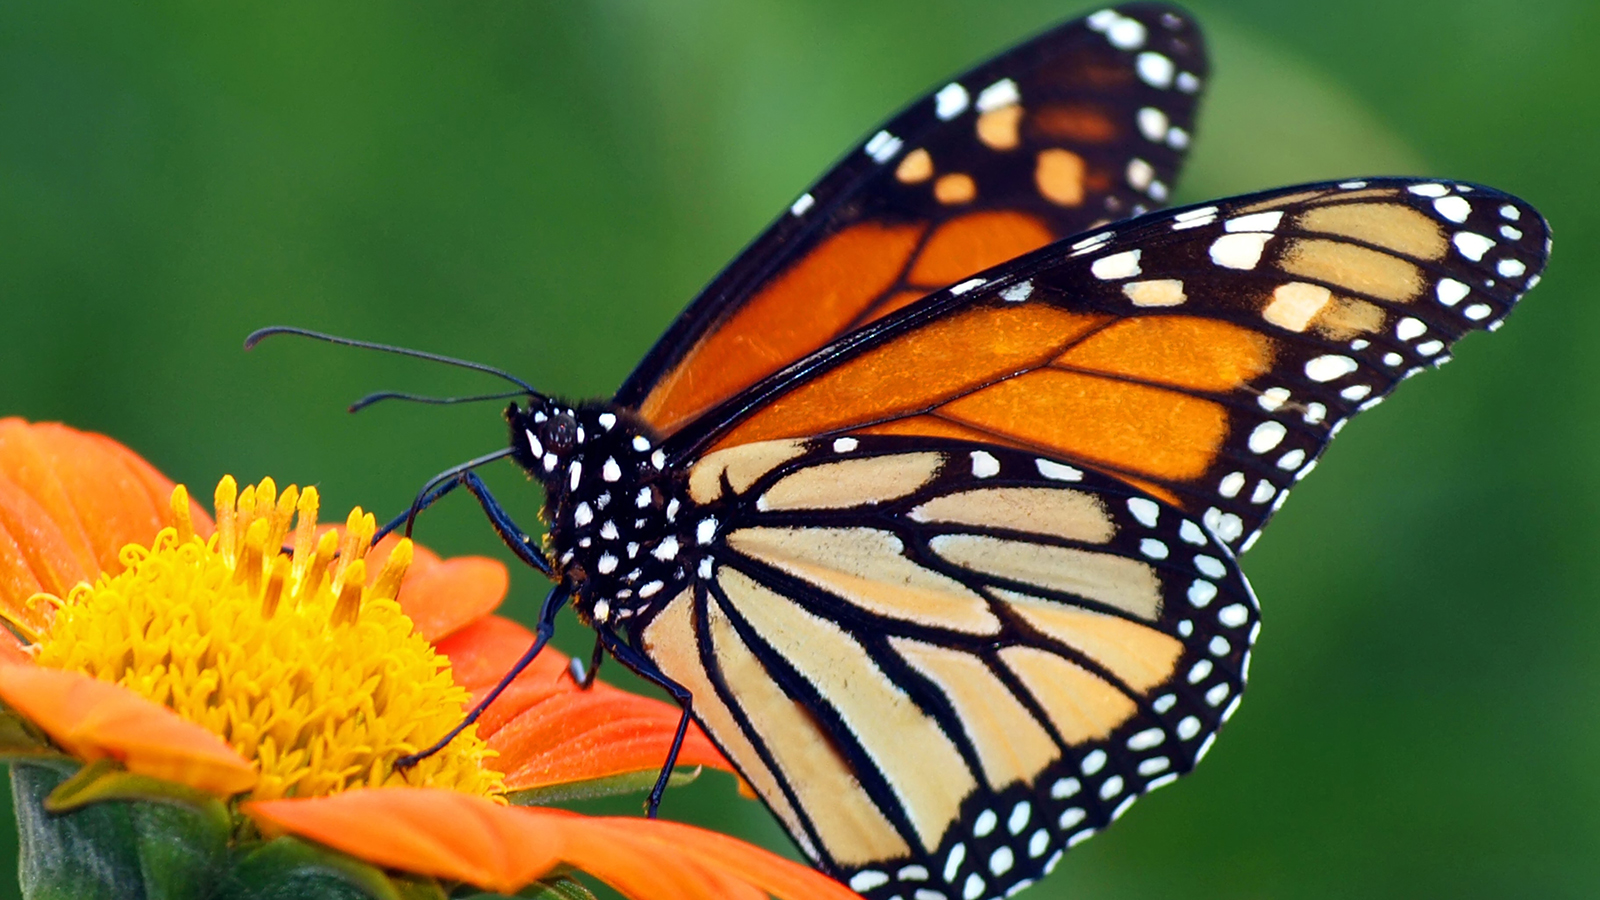 A Monarch Butterfly